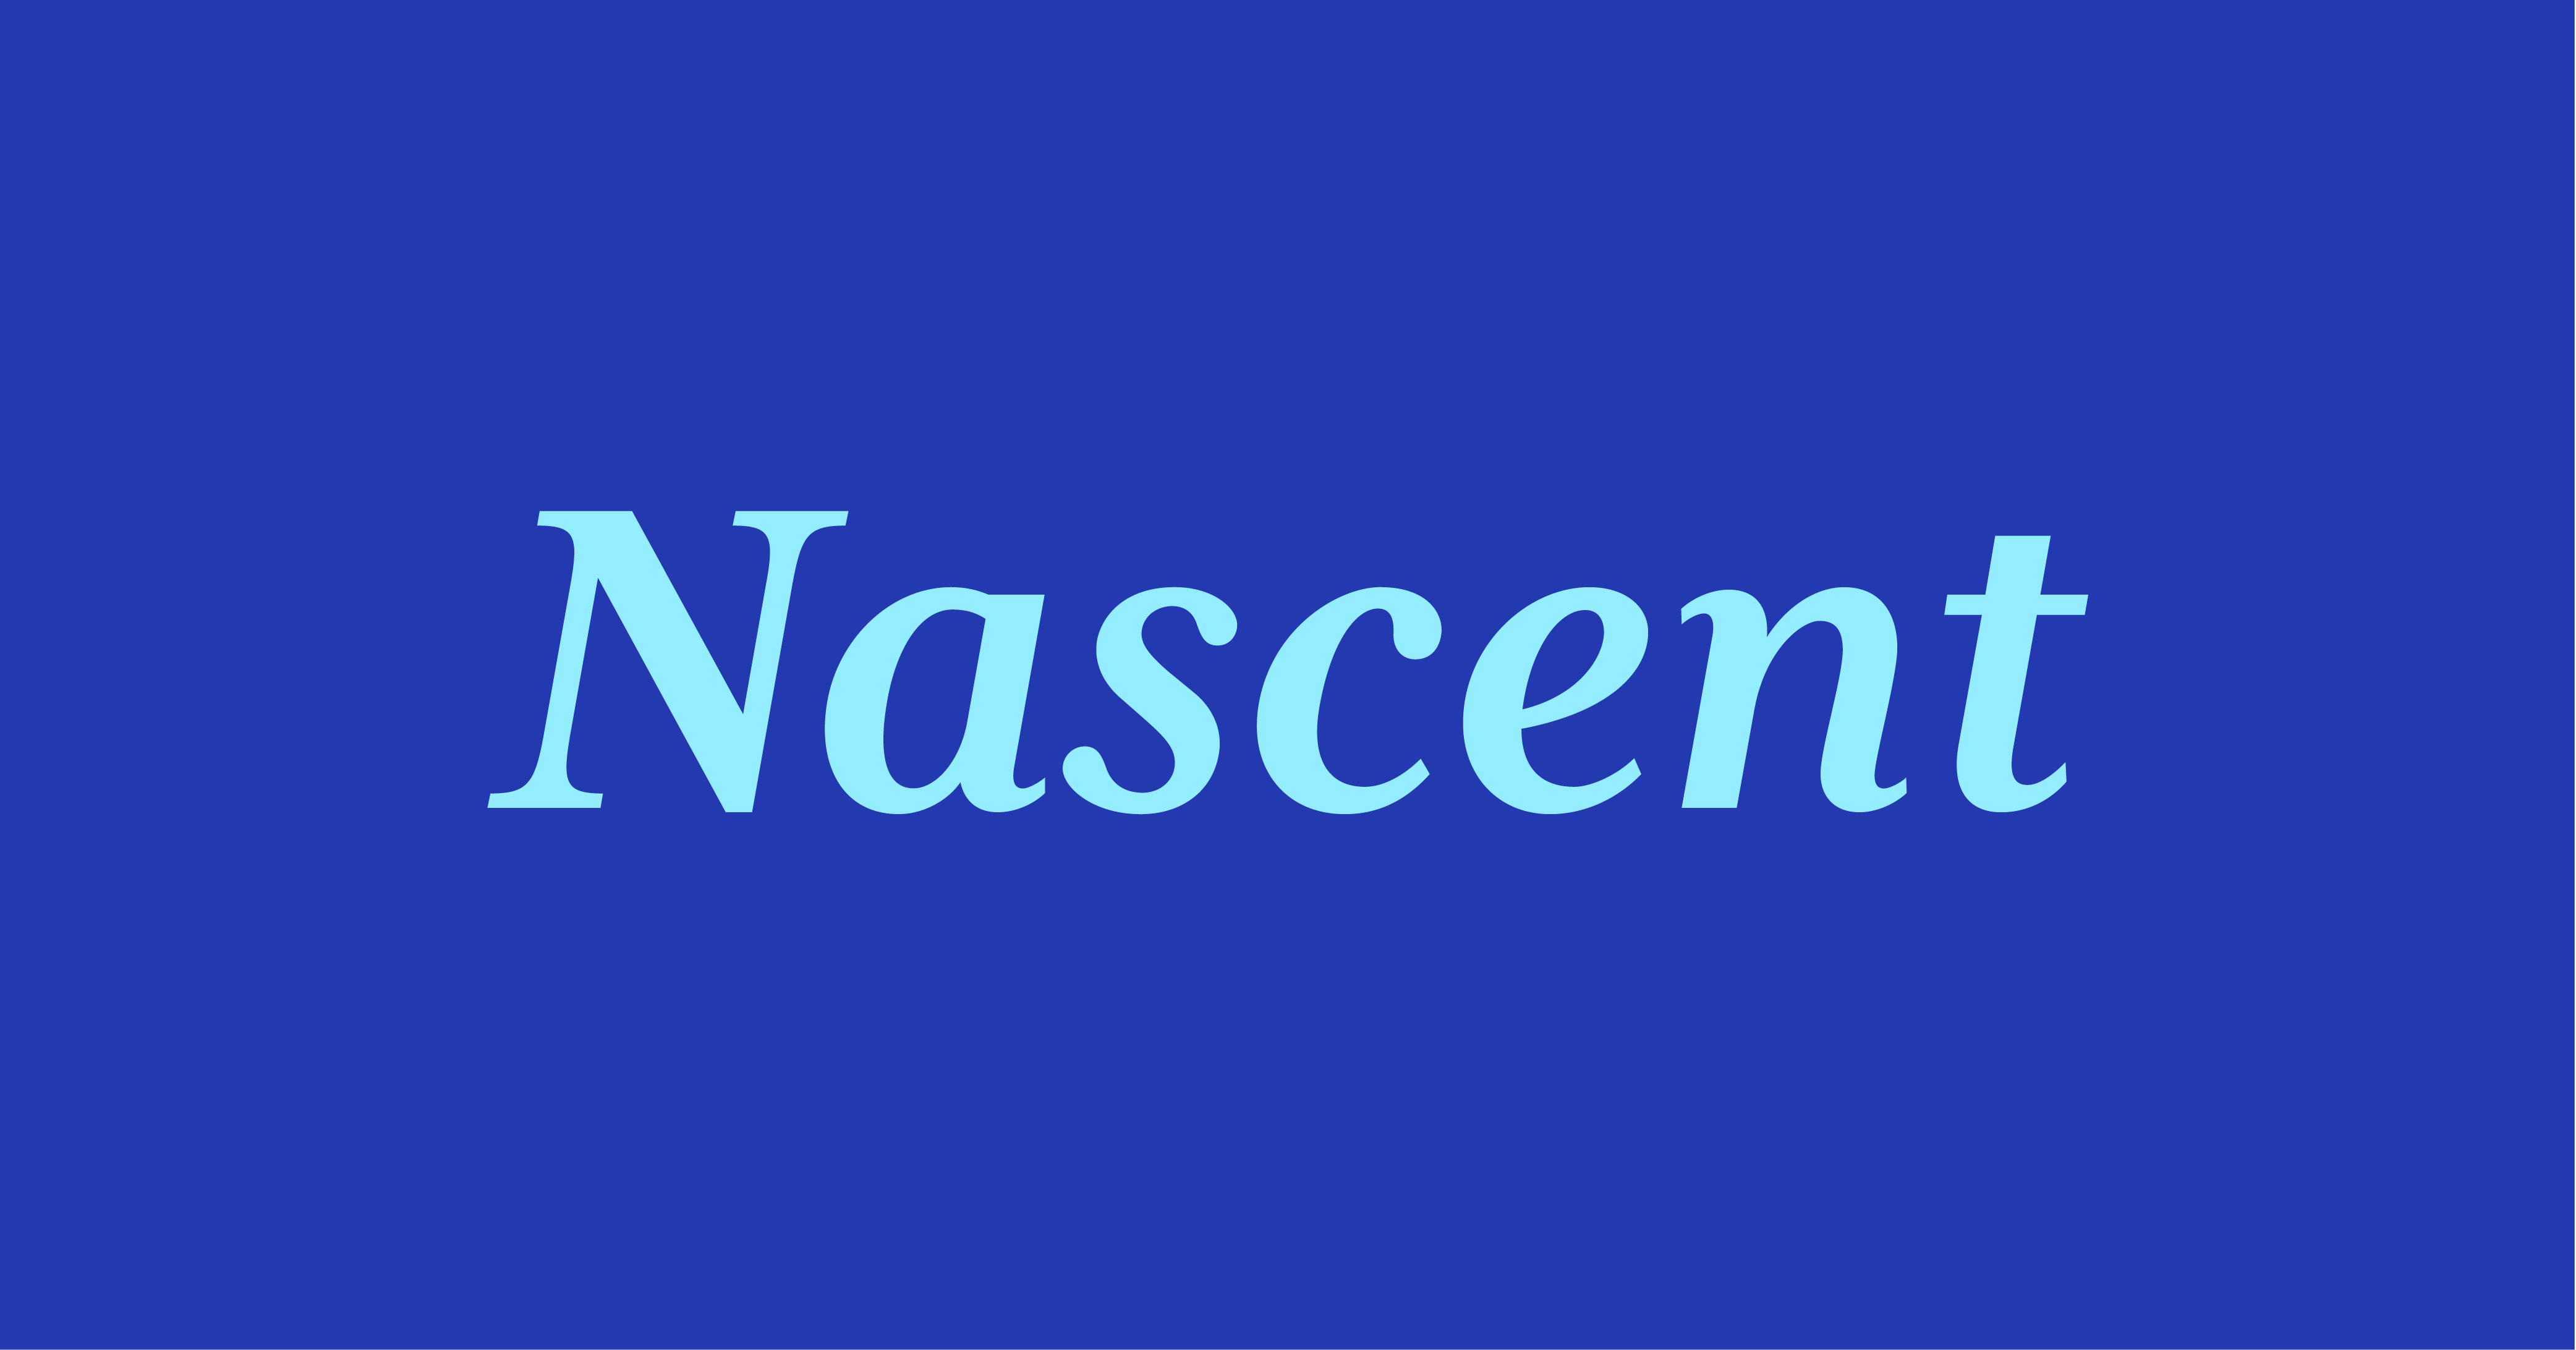 Nascent